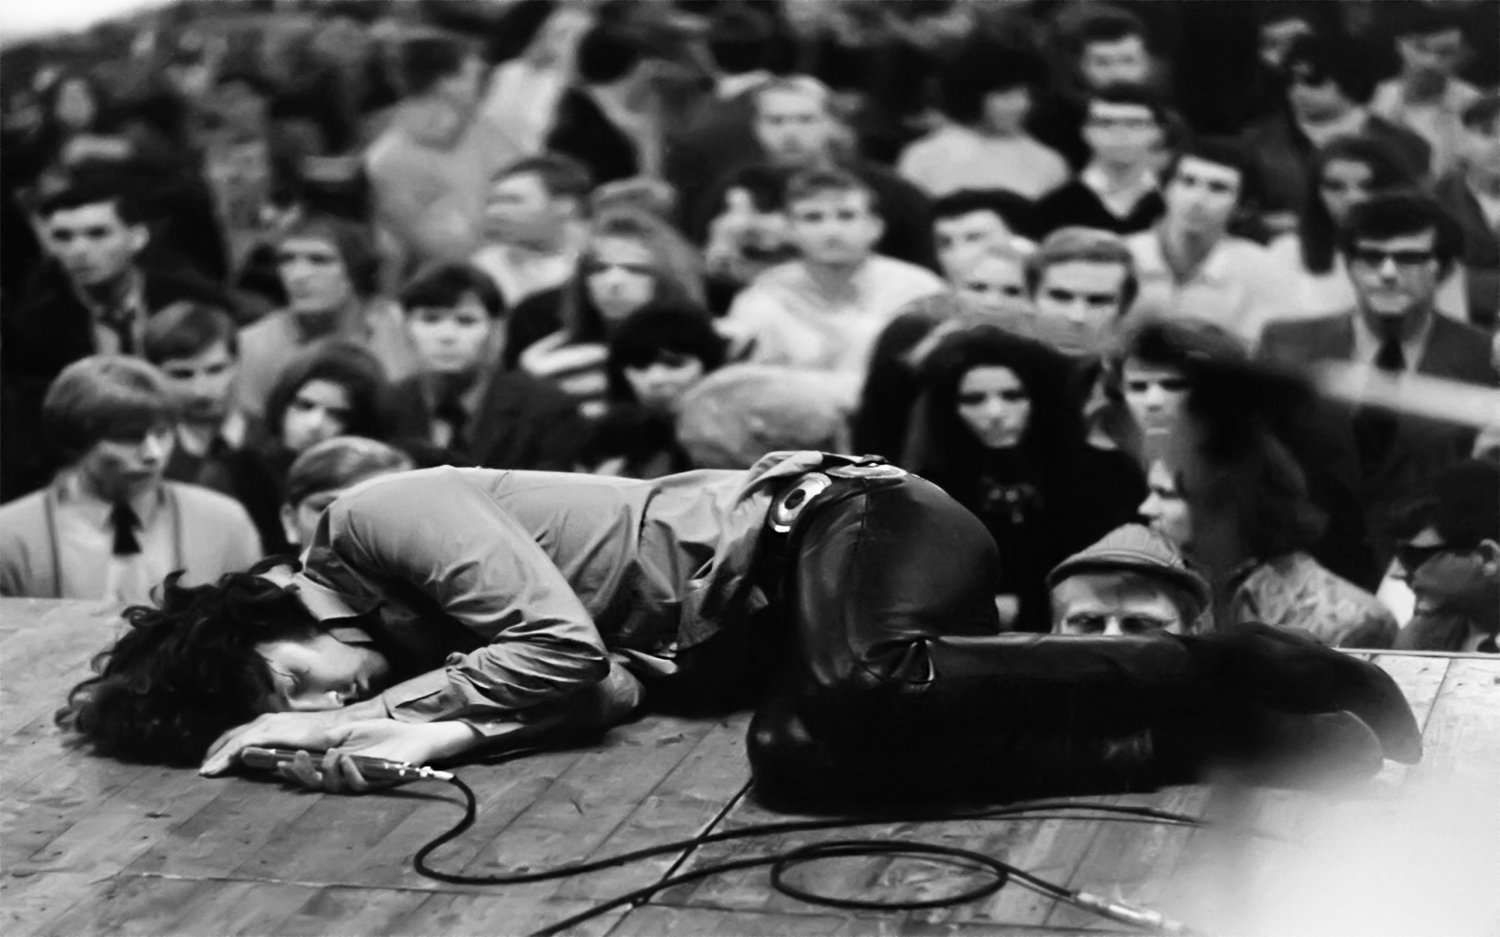 Jim Morrison 13"x19" (32cm/49cm) Polyester Fabric Poster